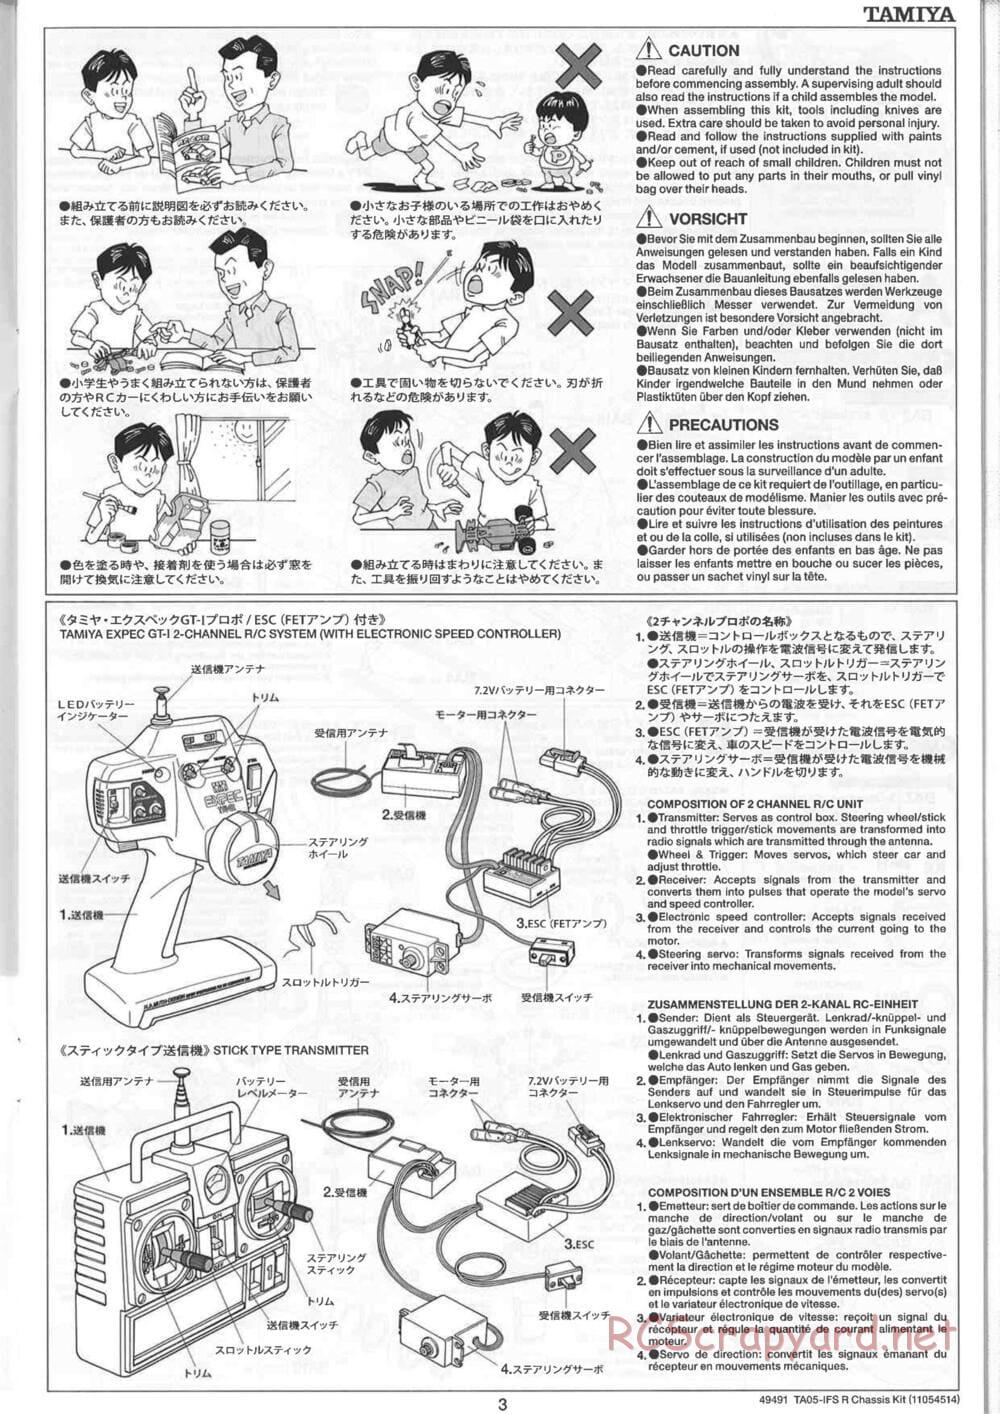 Tamiya - TA05-IFS R Chassis - Manual - Page 3